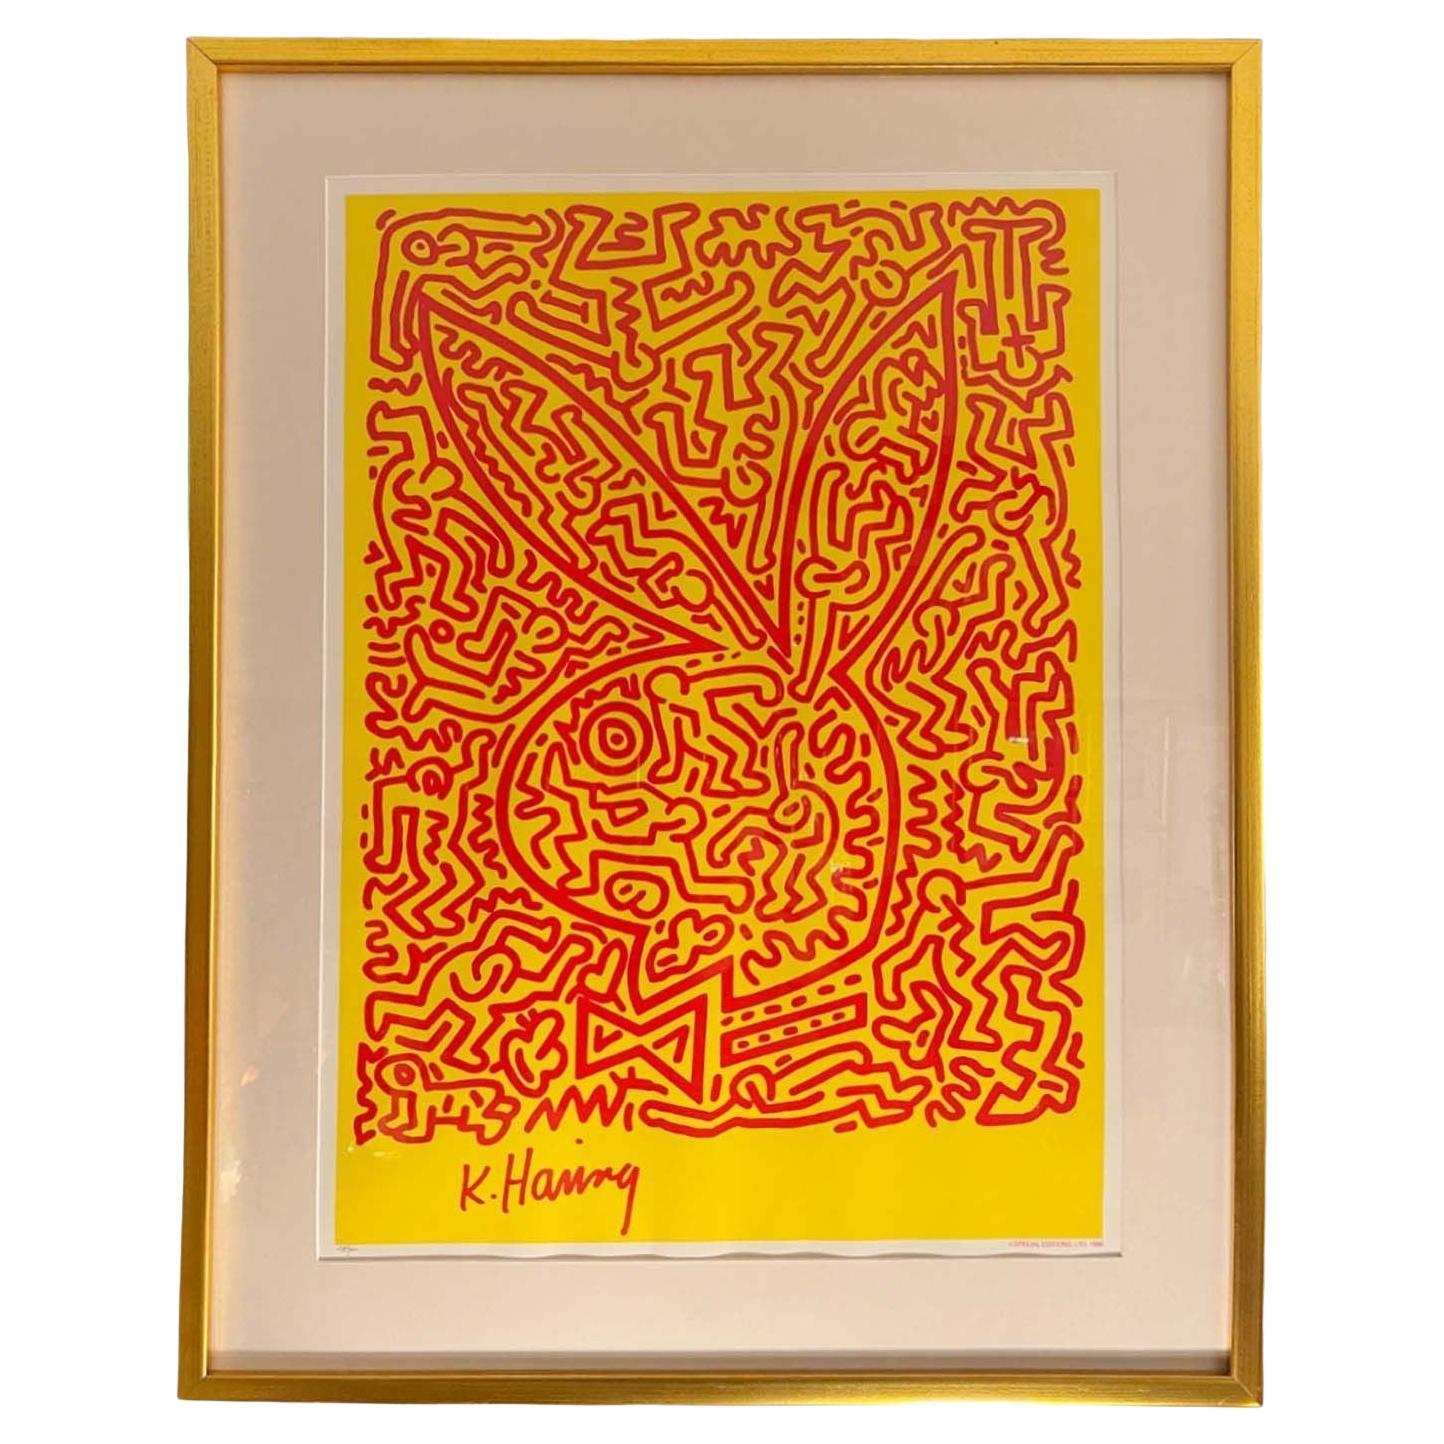 'Playboy Bunny No. 2', Keith Haring Serigraph